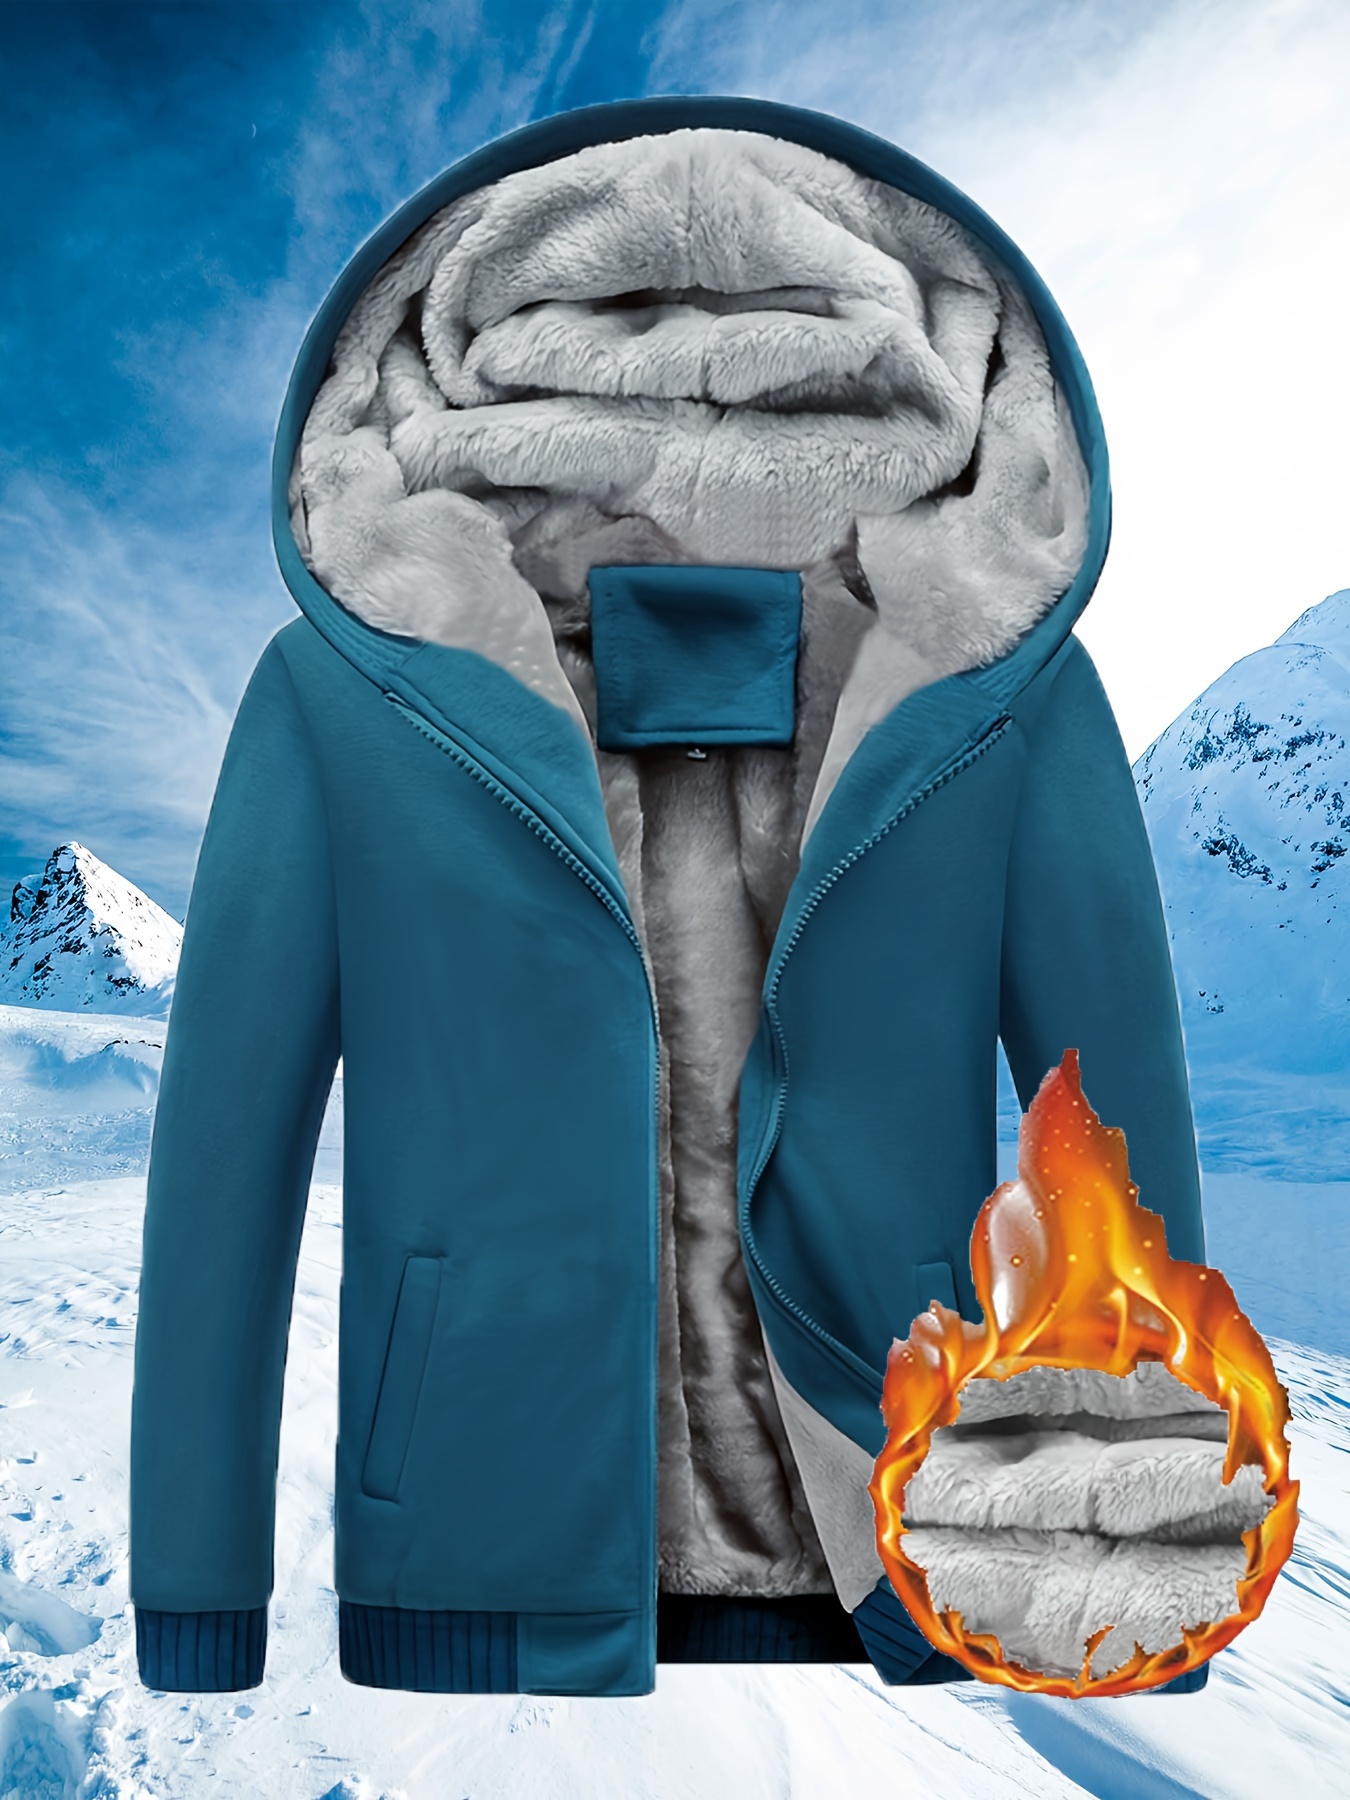 winter warm casual sweatshirt jacket thickened fleece zipper up jacket for outdoor sports womens clothing